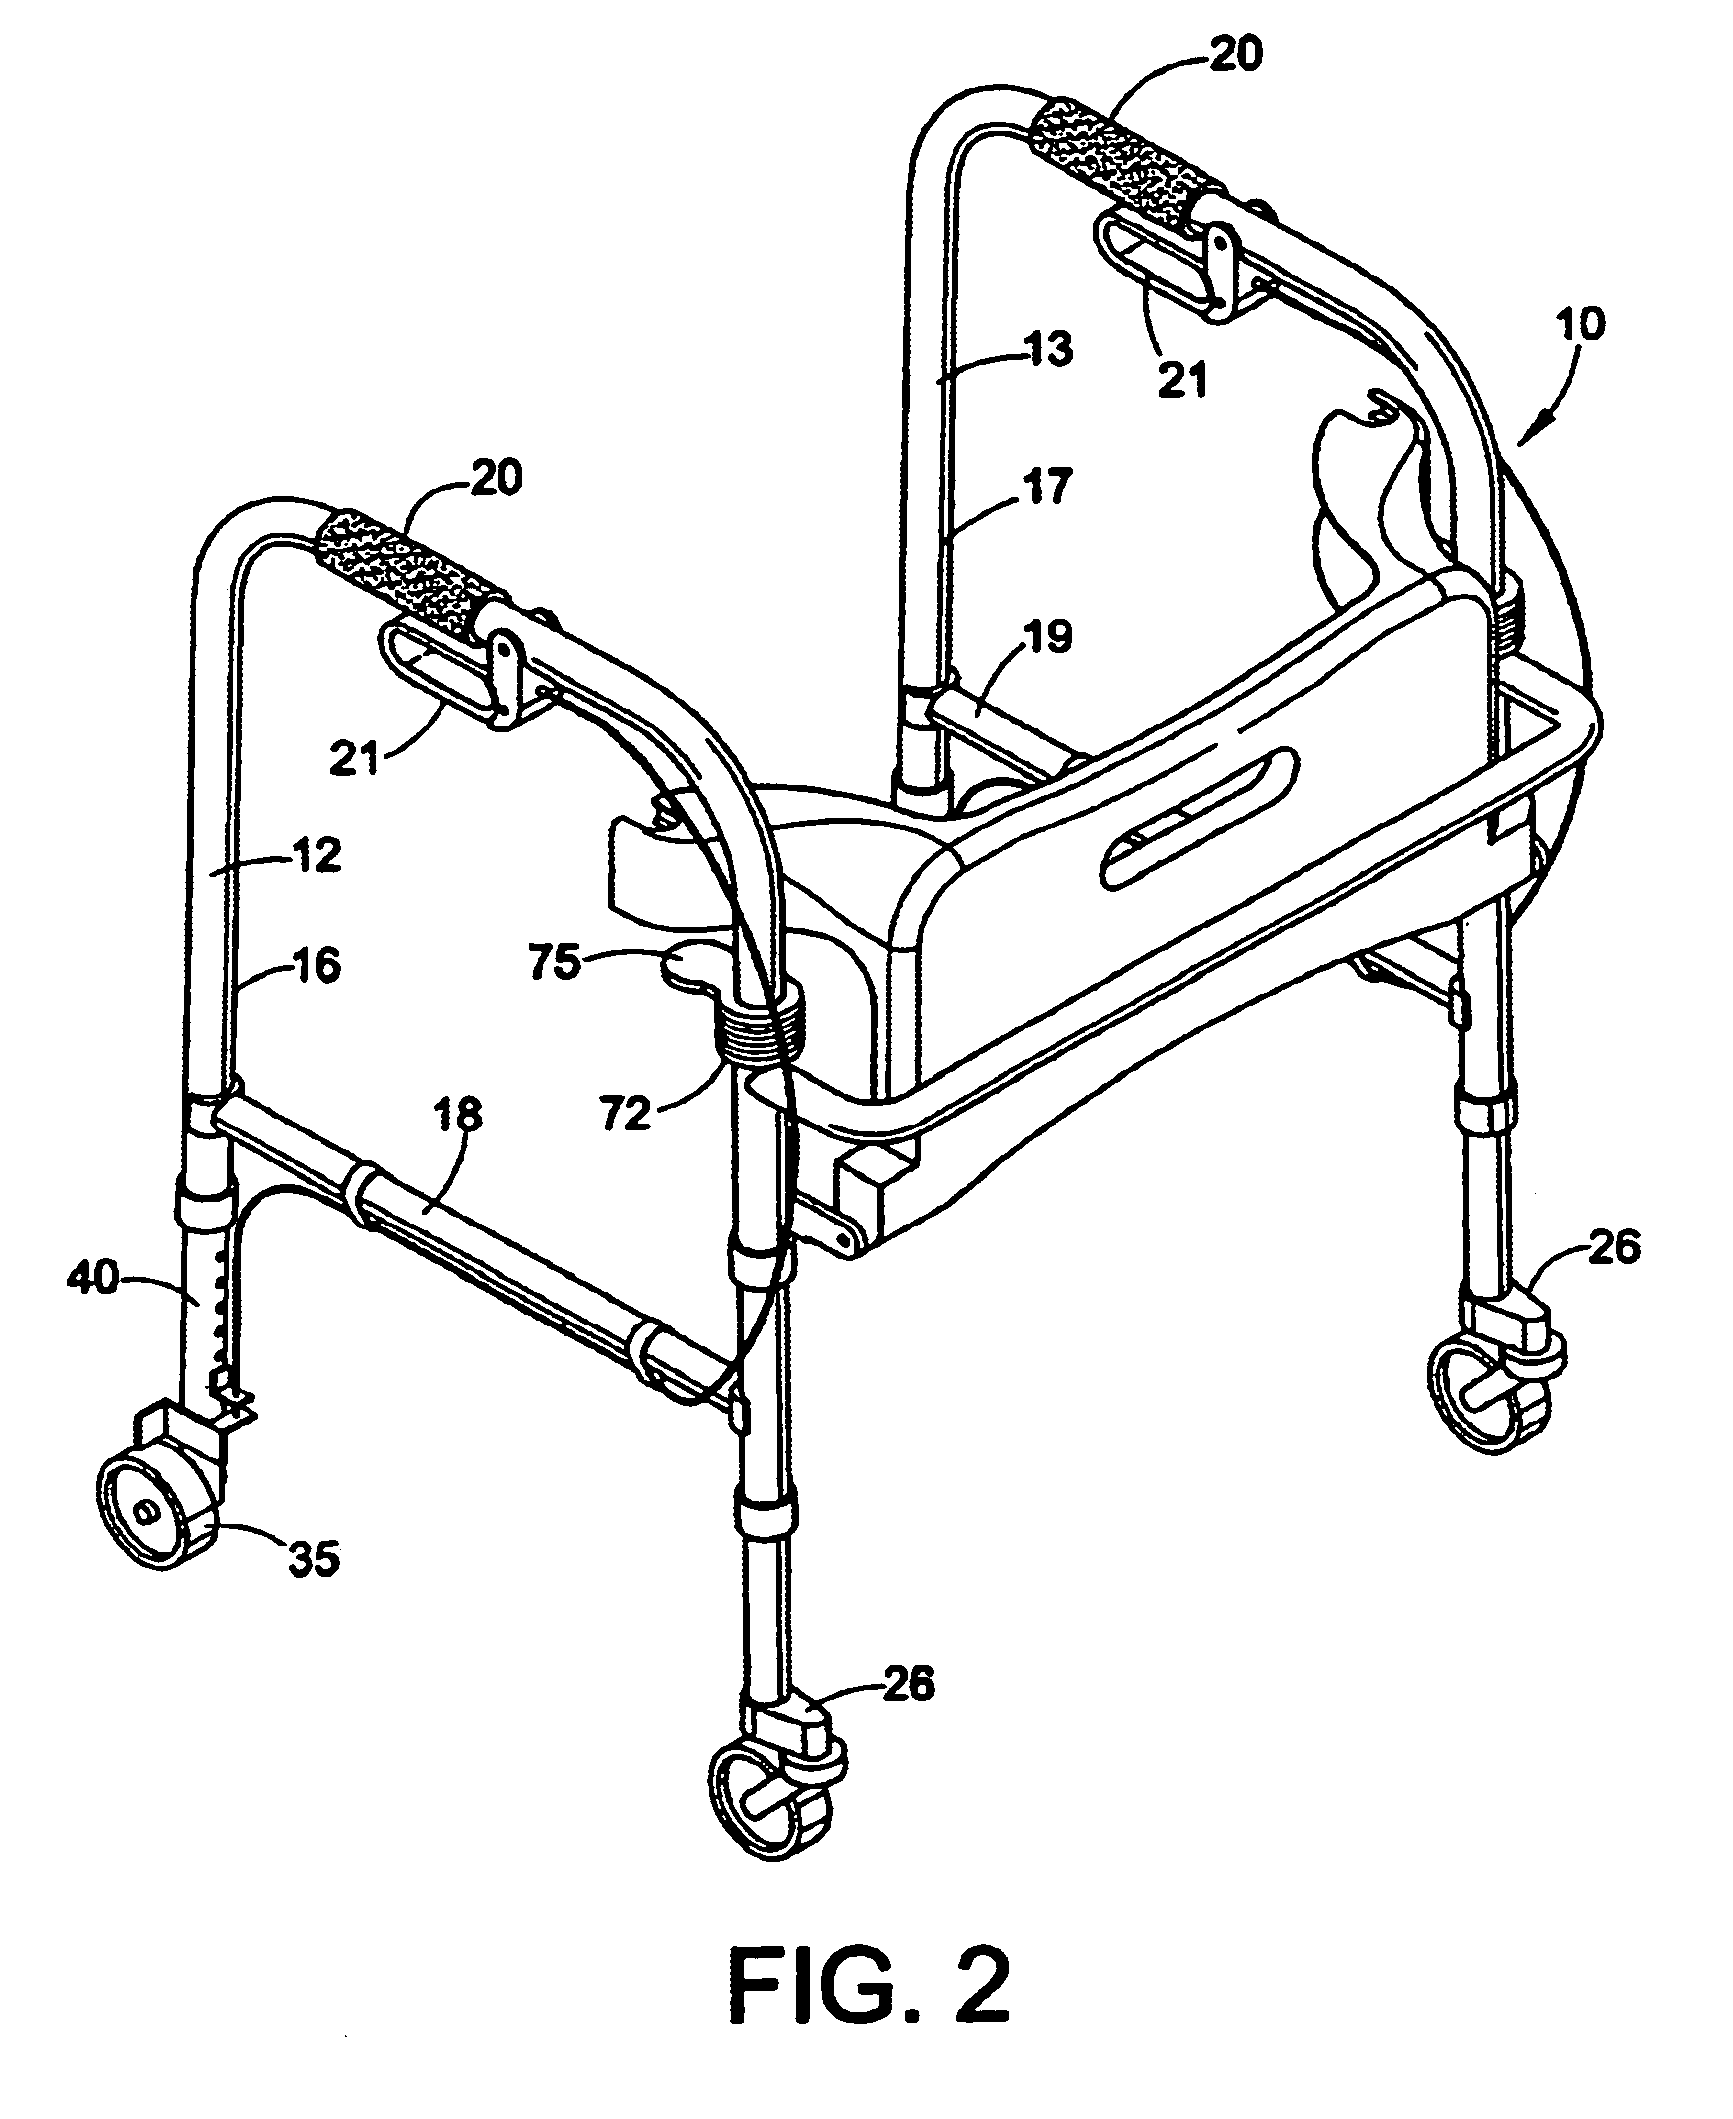 Inwardly folding rollator with an upwardly pivotable seat